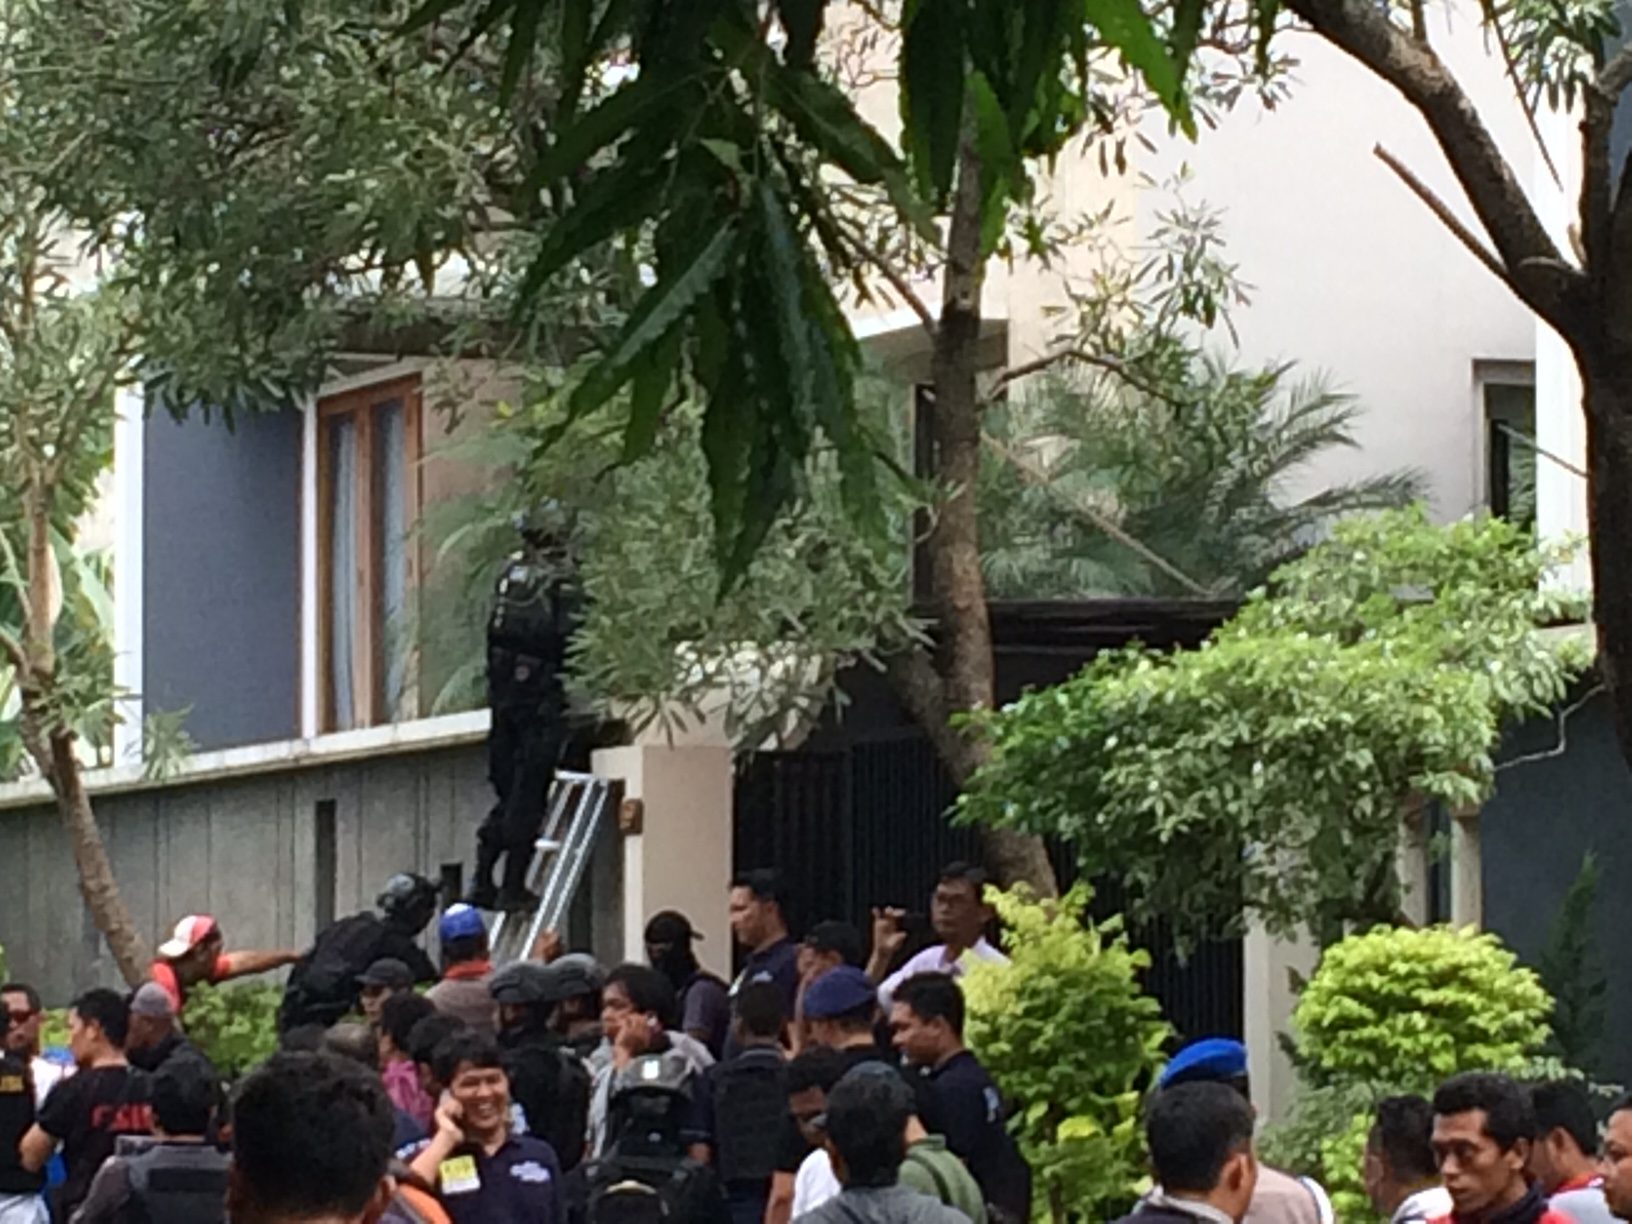 Upaya anggota kepolisian mengevakuasi korban dari lokasi penyanderaan di sebuah rumah di Pondok Indah, pada 3 September 2016. Foto oleh Rappler 